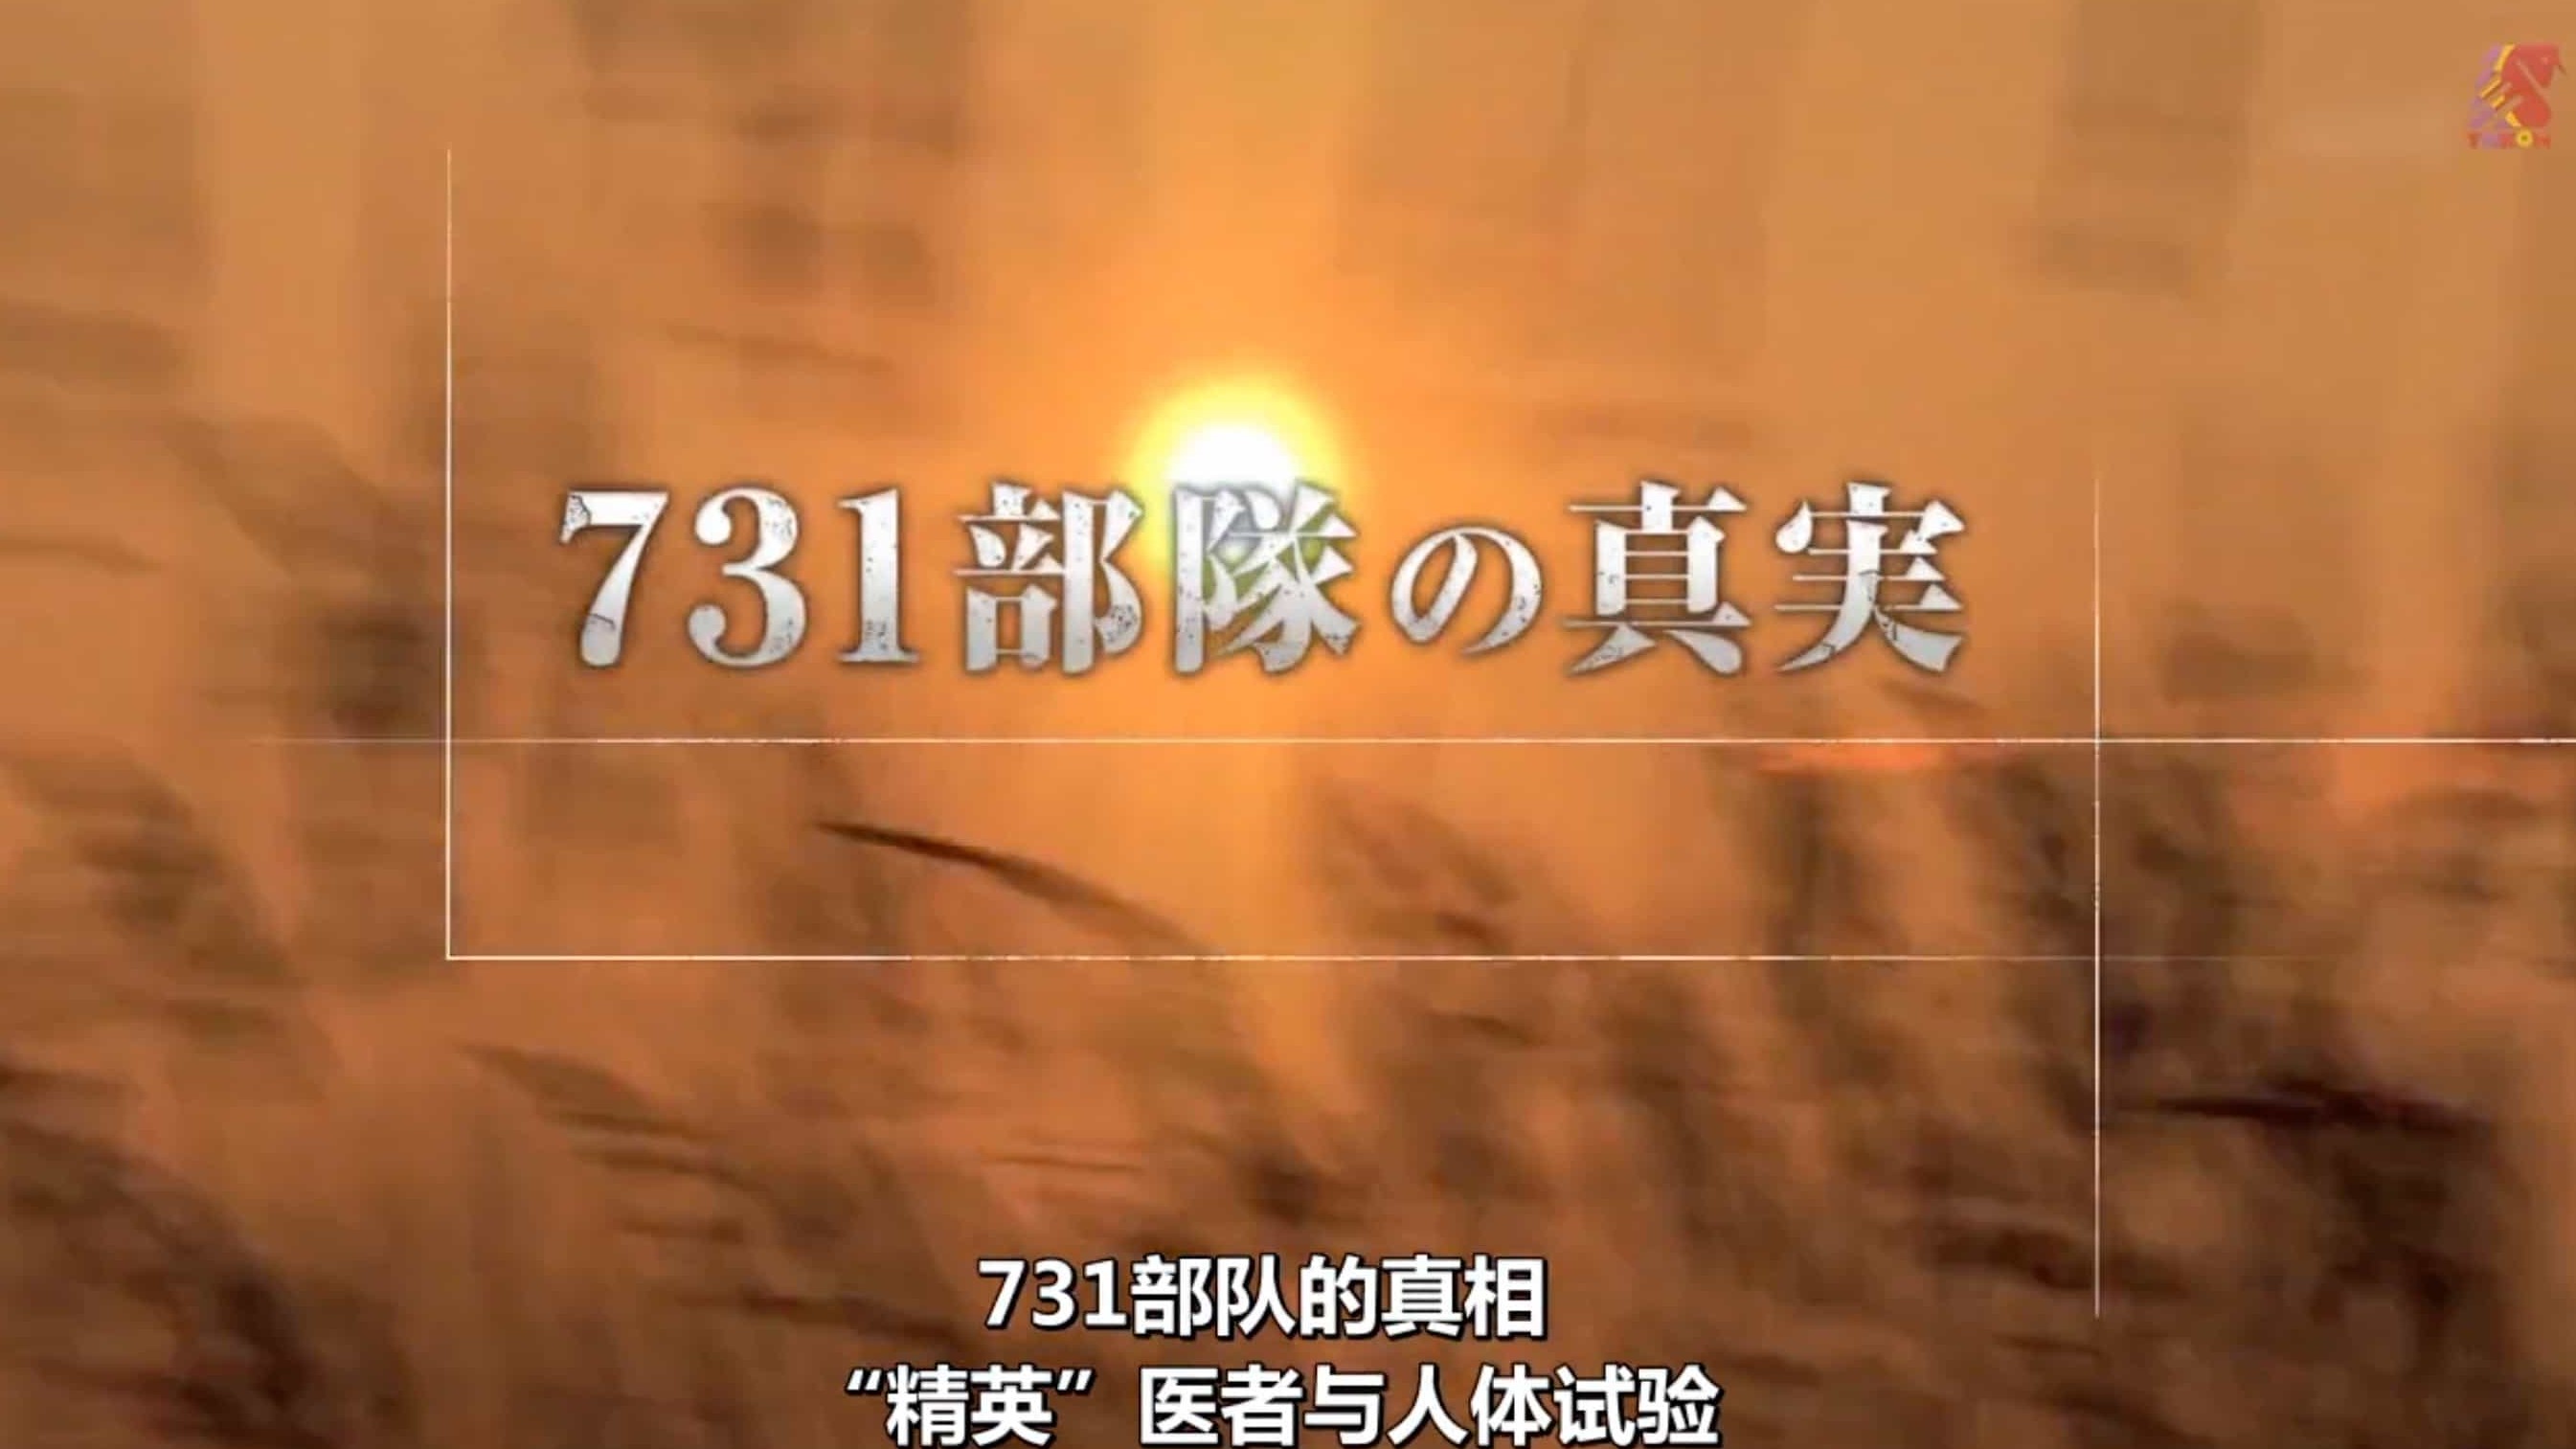 NHK纪录片《731部队的真相 “精英”医者与人体试验》日语中日双字 纪录片